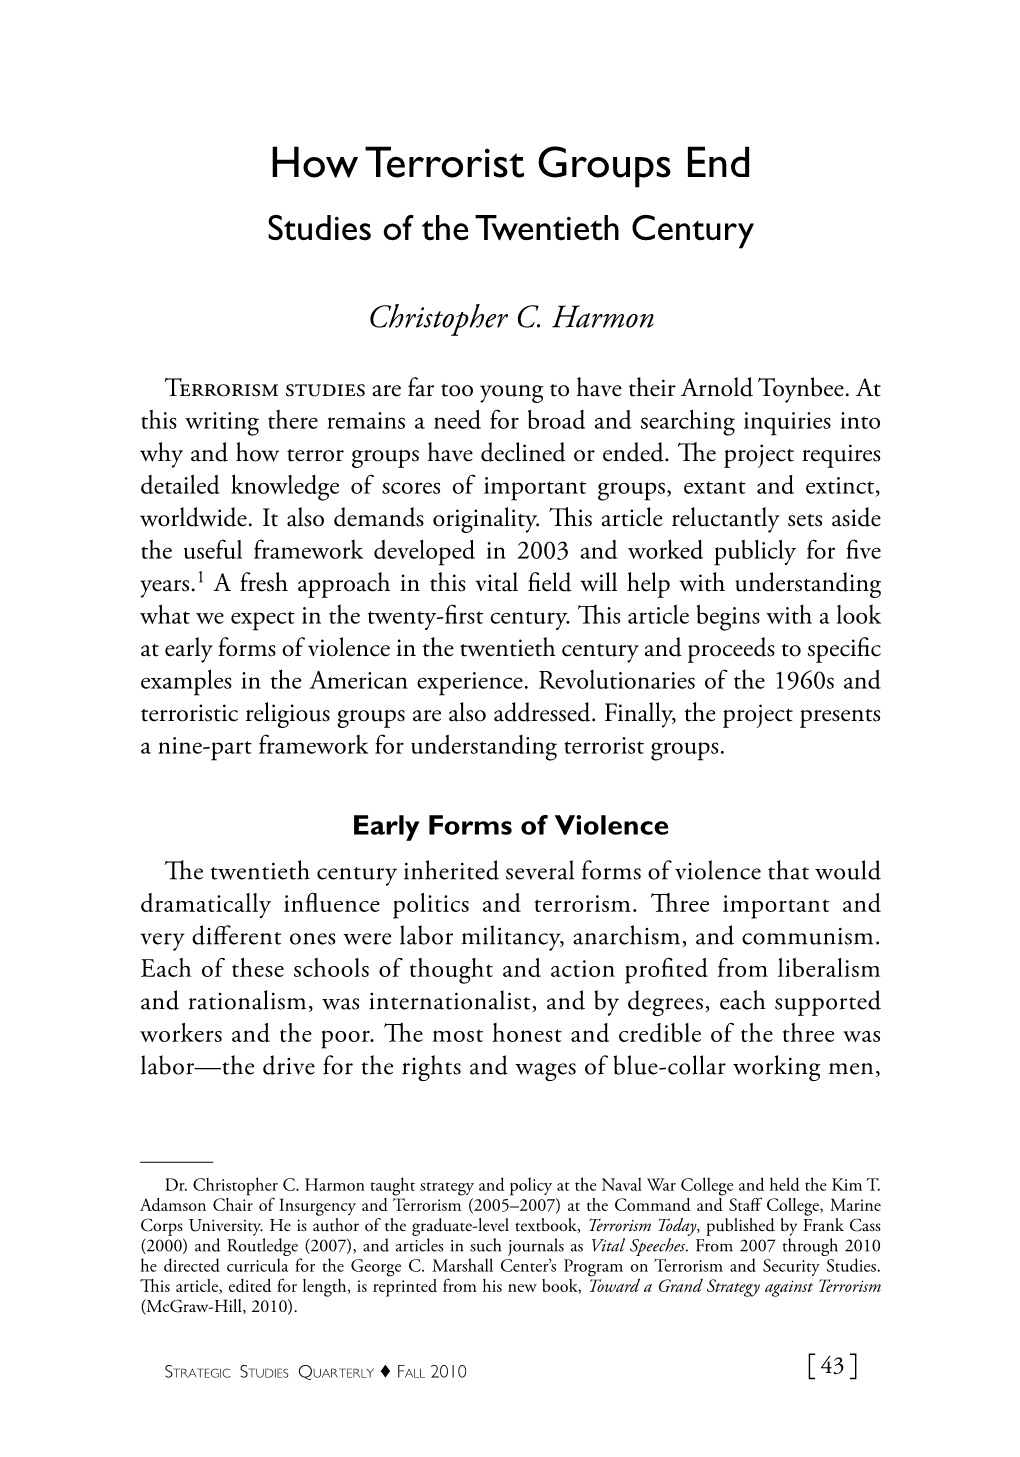 How Terrorist Groups End: Studies of the Twentieth Century